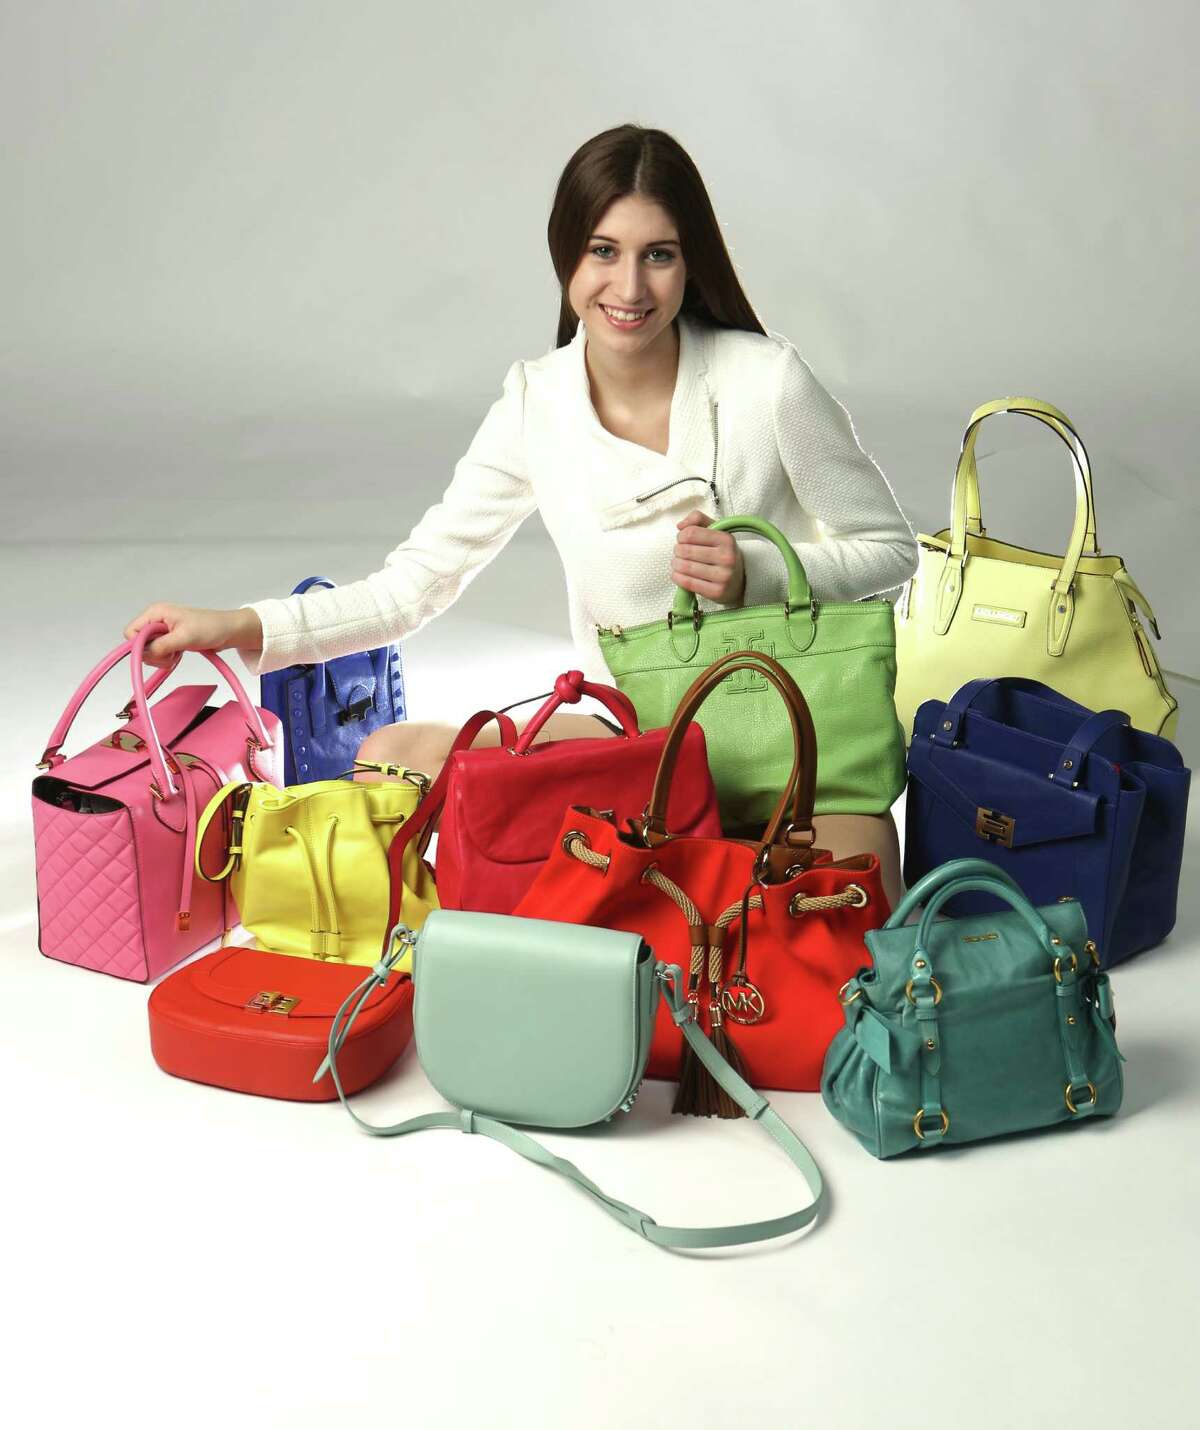 Spring handbags bring back the backpack and bucket bag